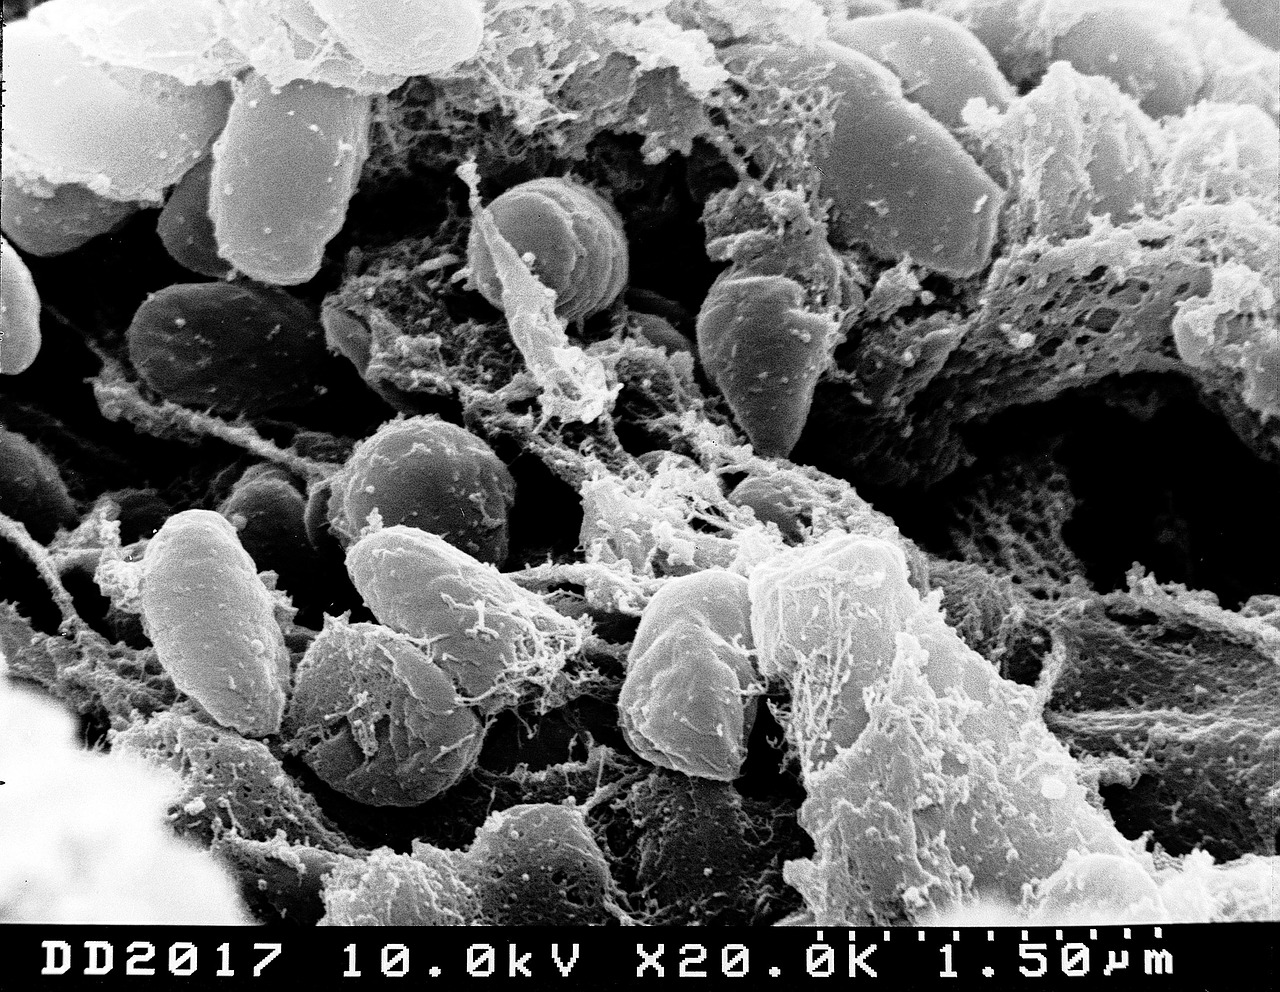 pestis bacteria bubonic plague free photo